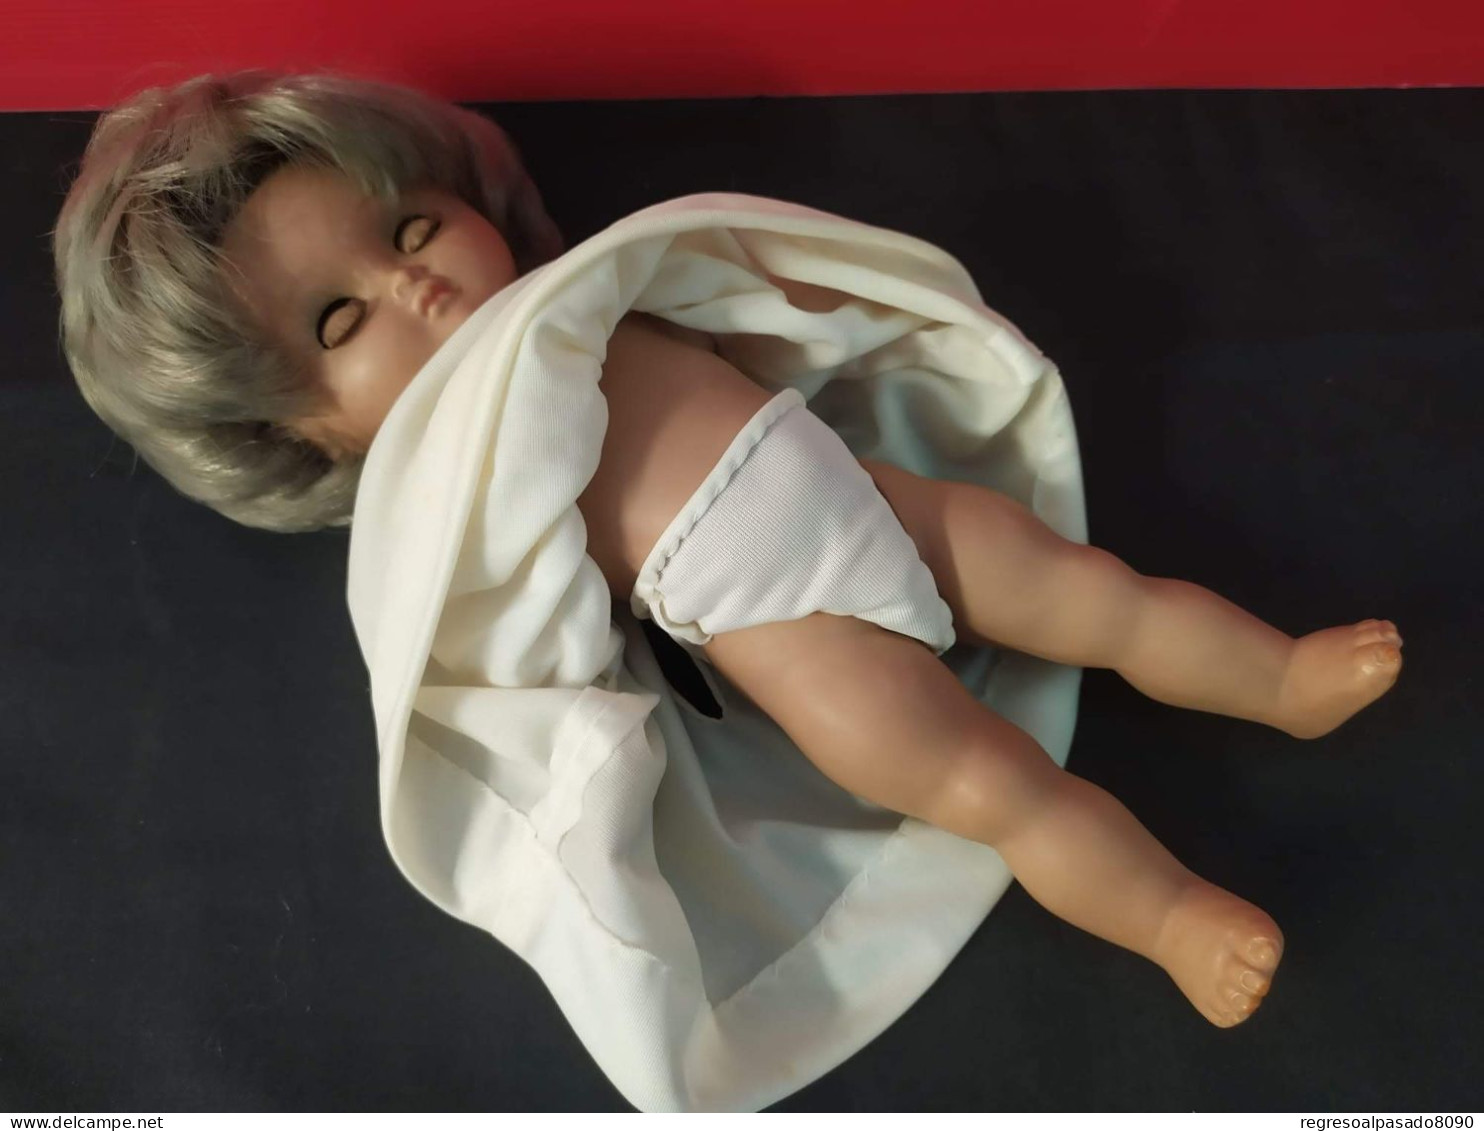 poupée antique antigua y preciosa muñeca doll poupée linda pirula celuloide años 60-70